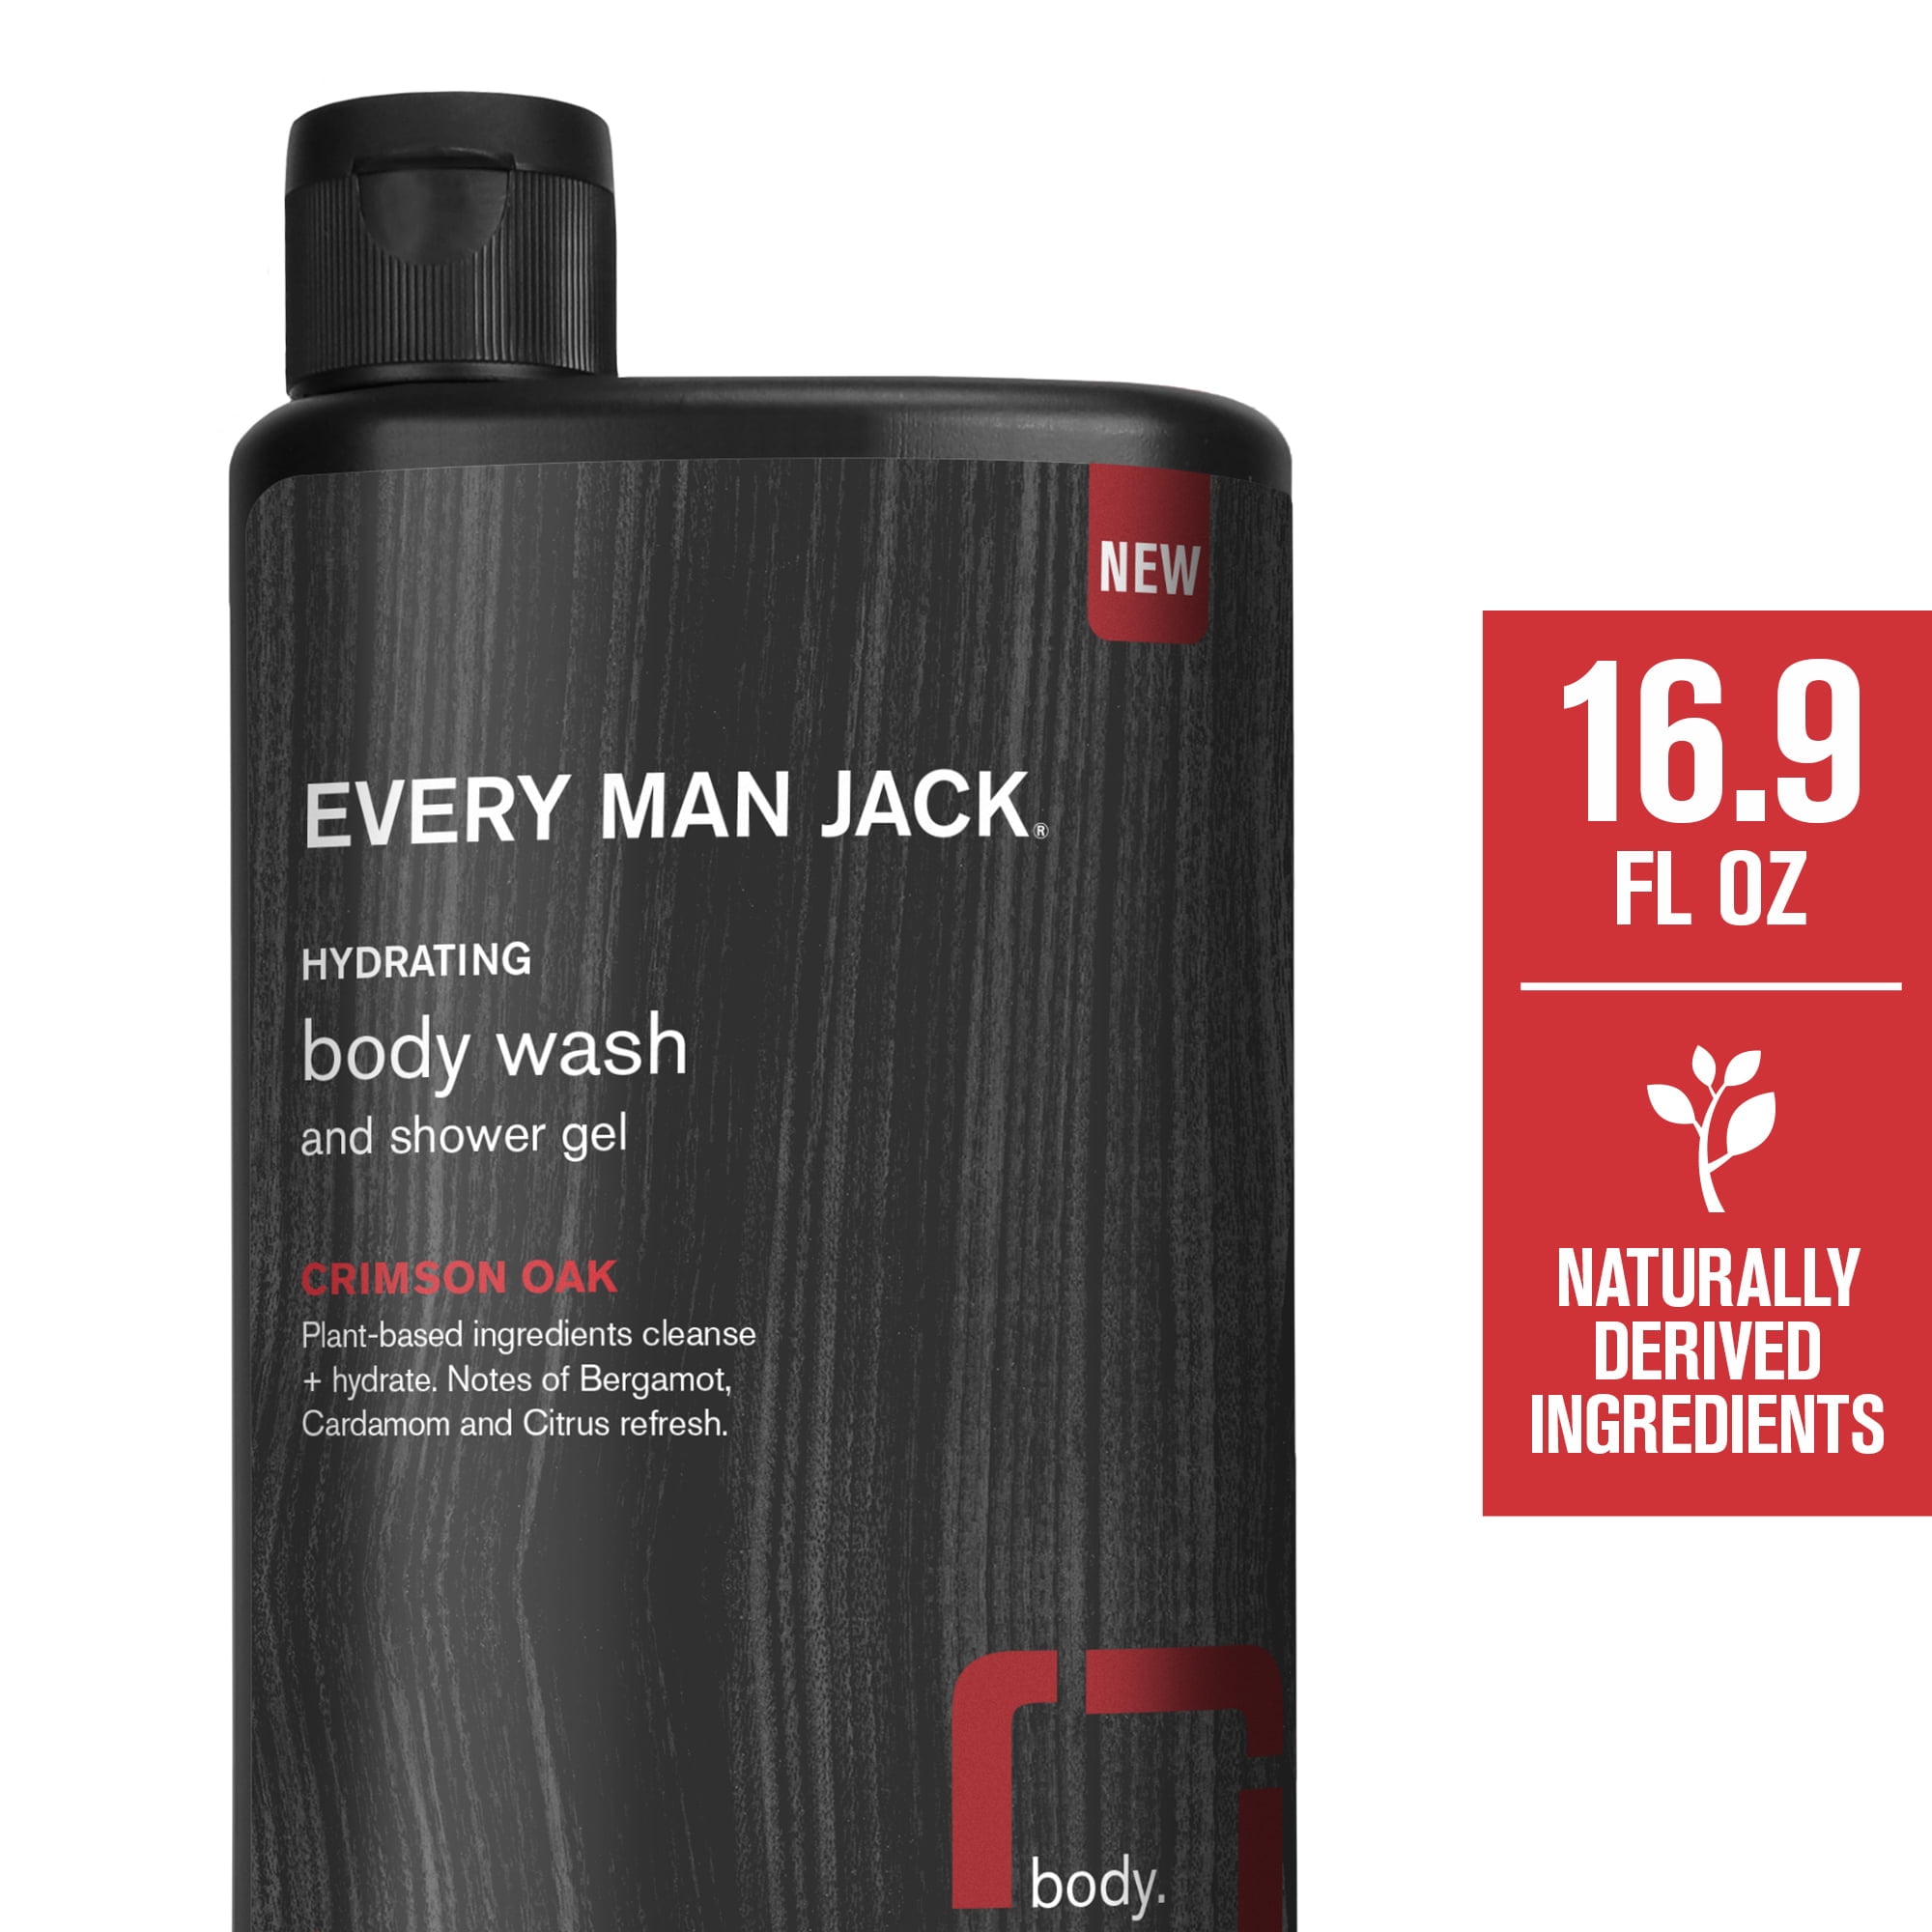 Every Man Jack Crimson Oak Hydrating Body Wash for Men, Naturally Derived, 16.9 oz